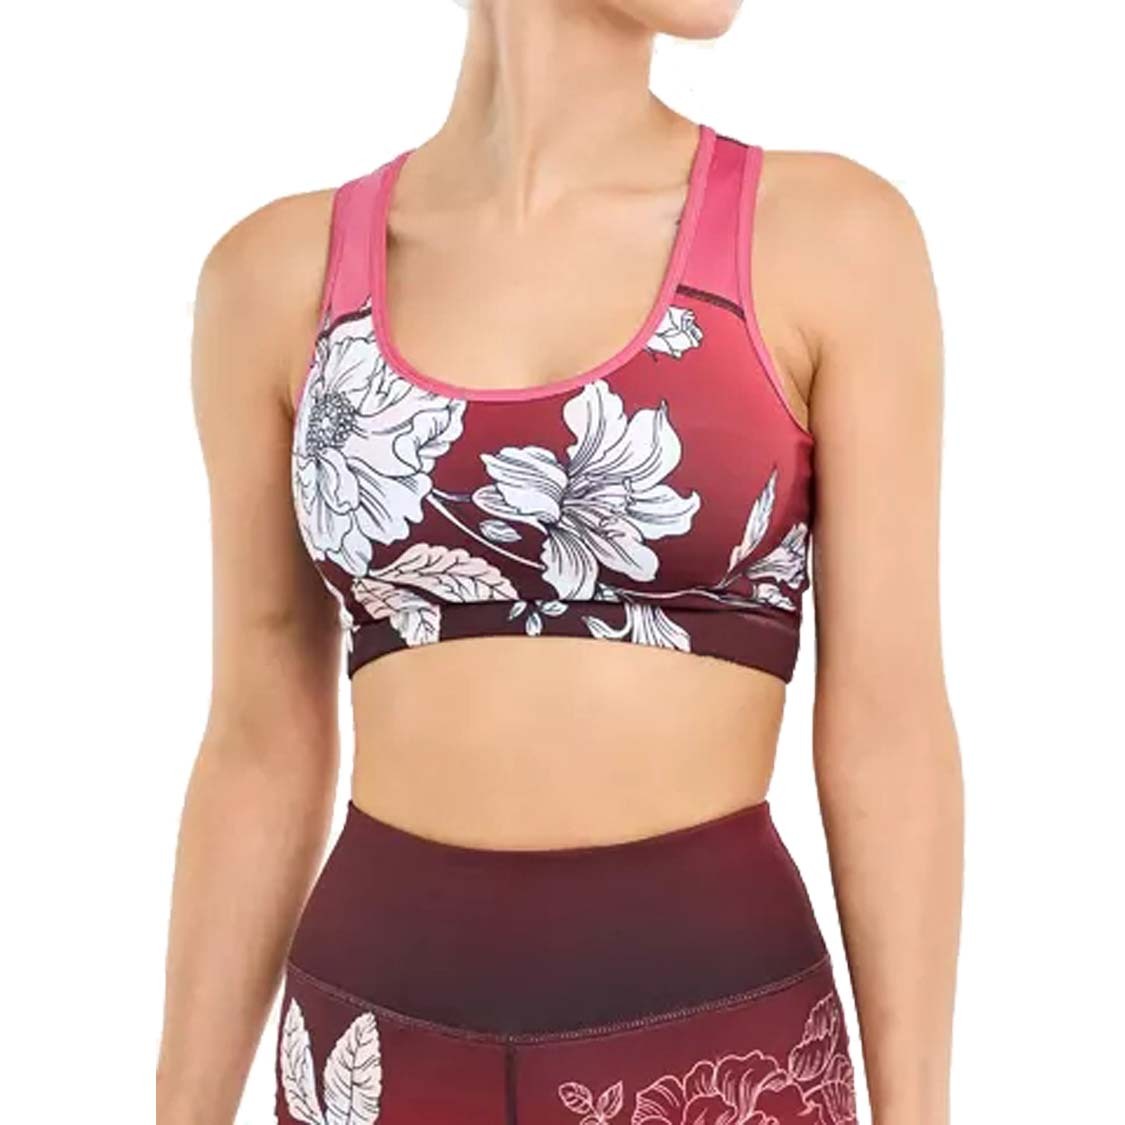 Sujetador deportivo acolchado para mujer, camisetas deportivas para correr, sujetador de Yoga, camisetas atléticas